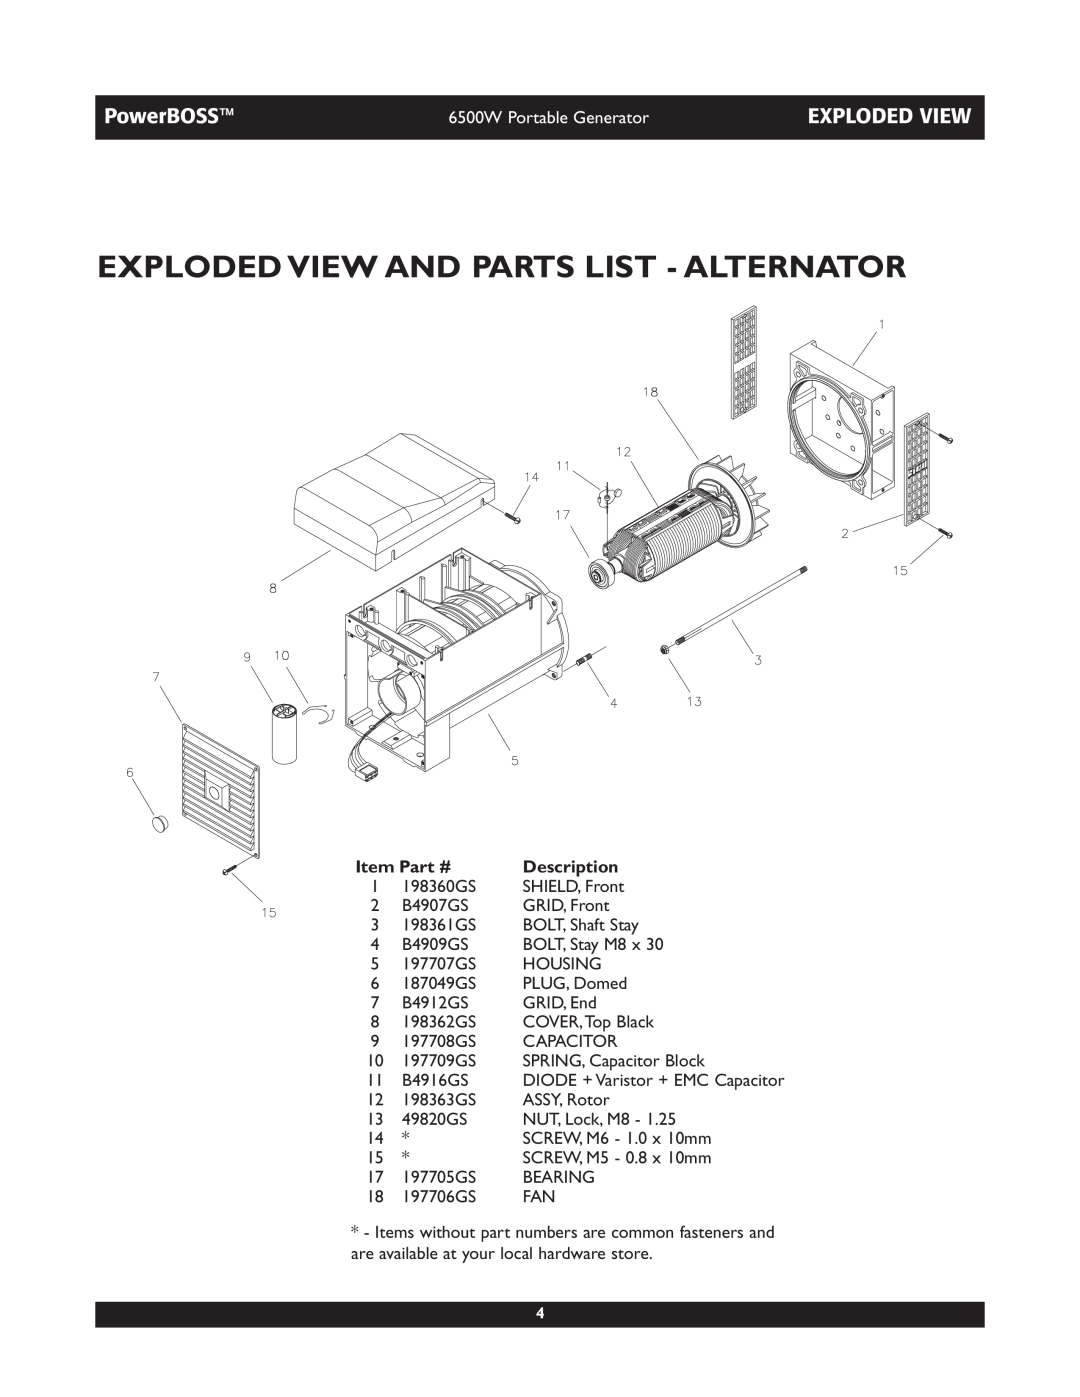 Briggs & Stratton 030227 manual Exploded View And Parts List - Alternator, PowerBOSS, 6500W Portable Generator, Description 